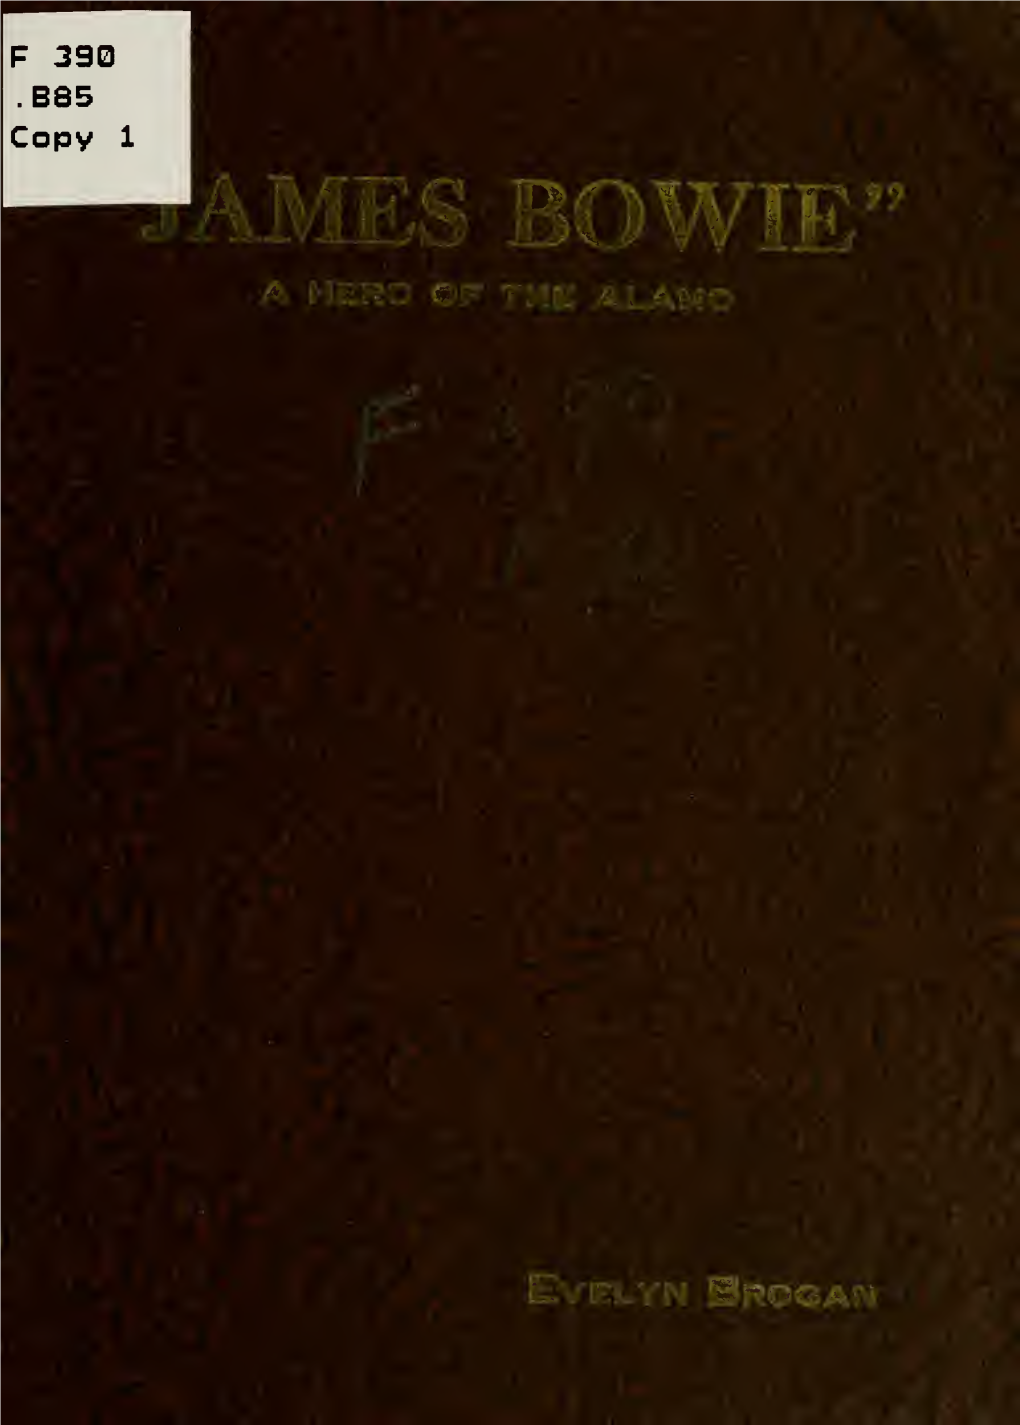 "James Bowie", a Hero of the Alamo